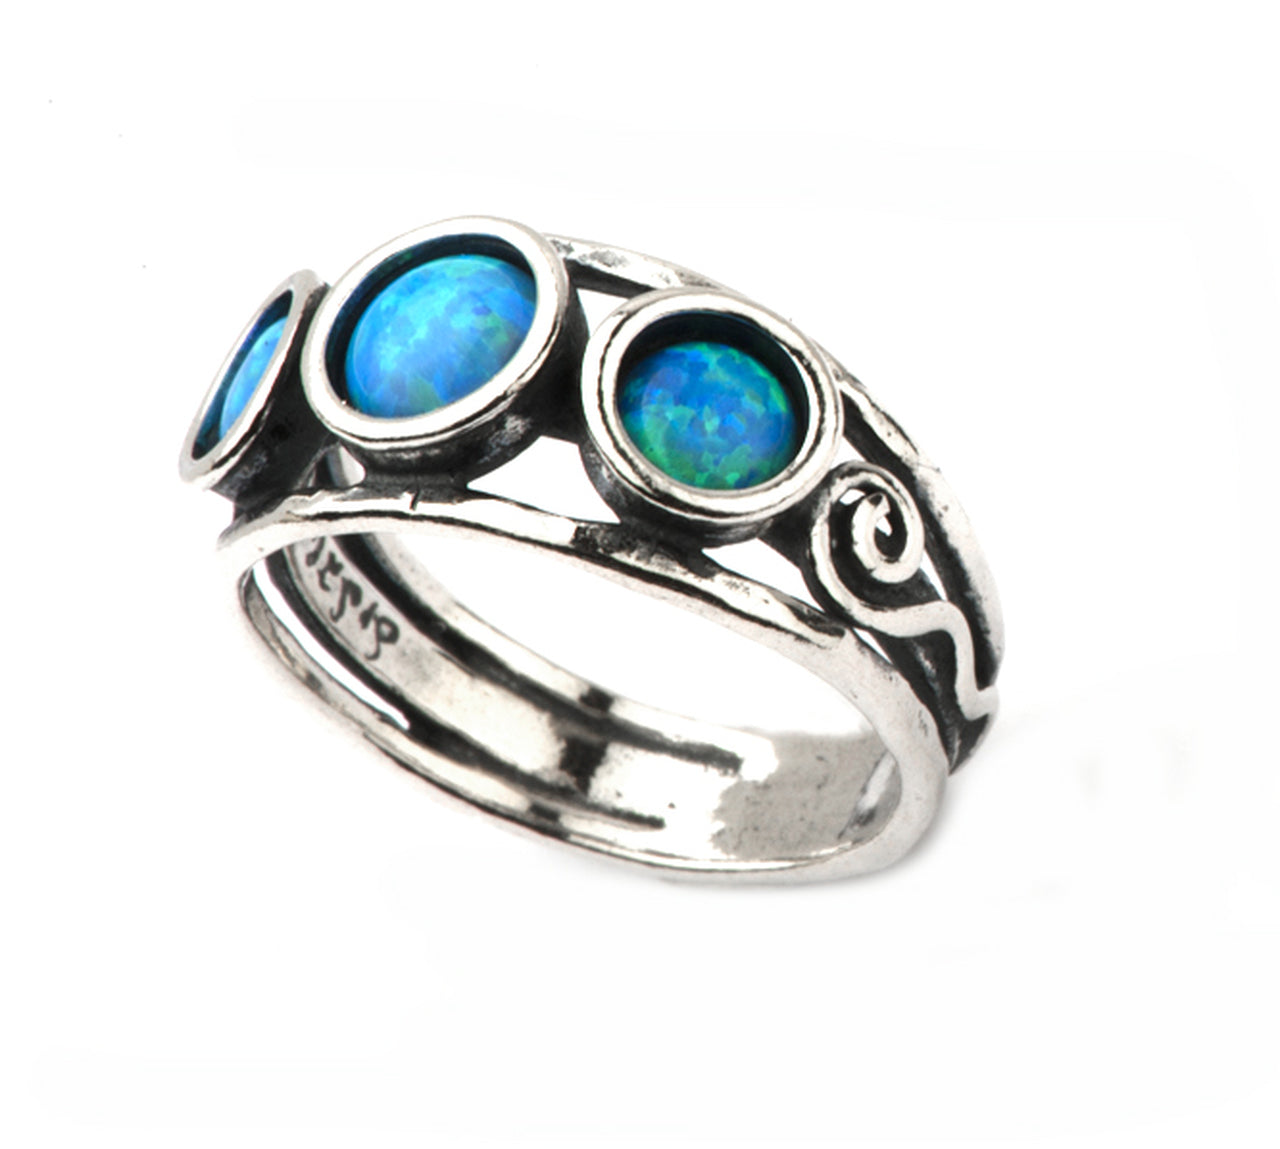 Round Opals Ring - The Nancy Smillie Shop - Art, Jewellery & Designer Gifts Glasgow